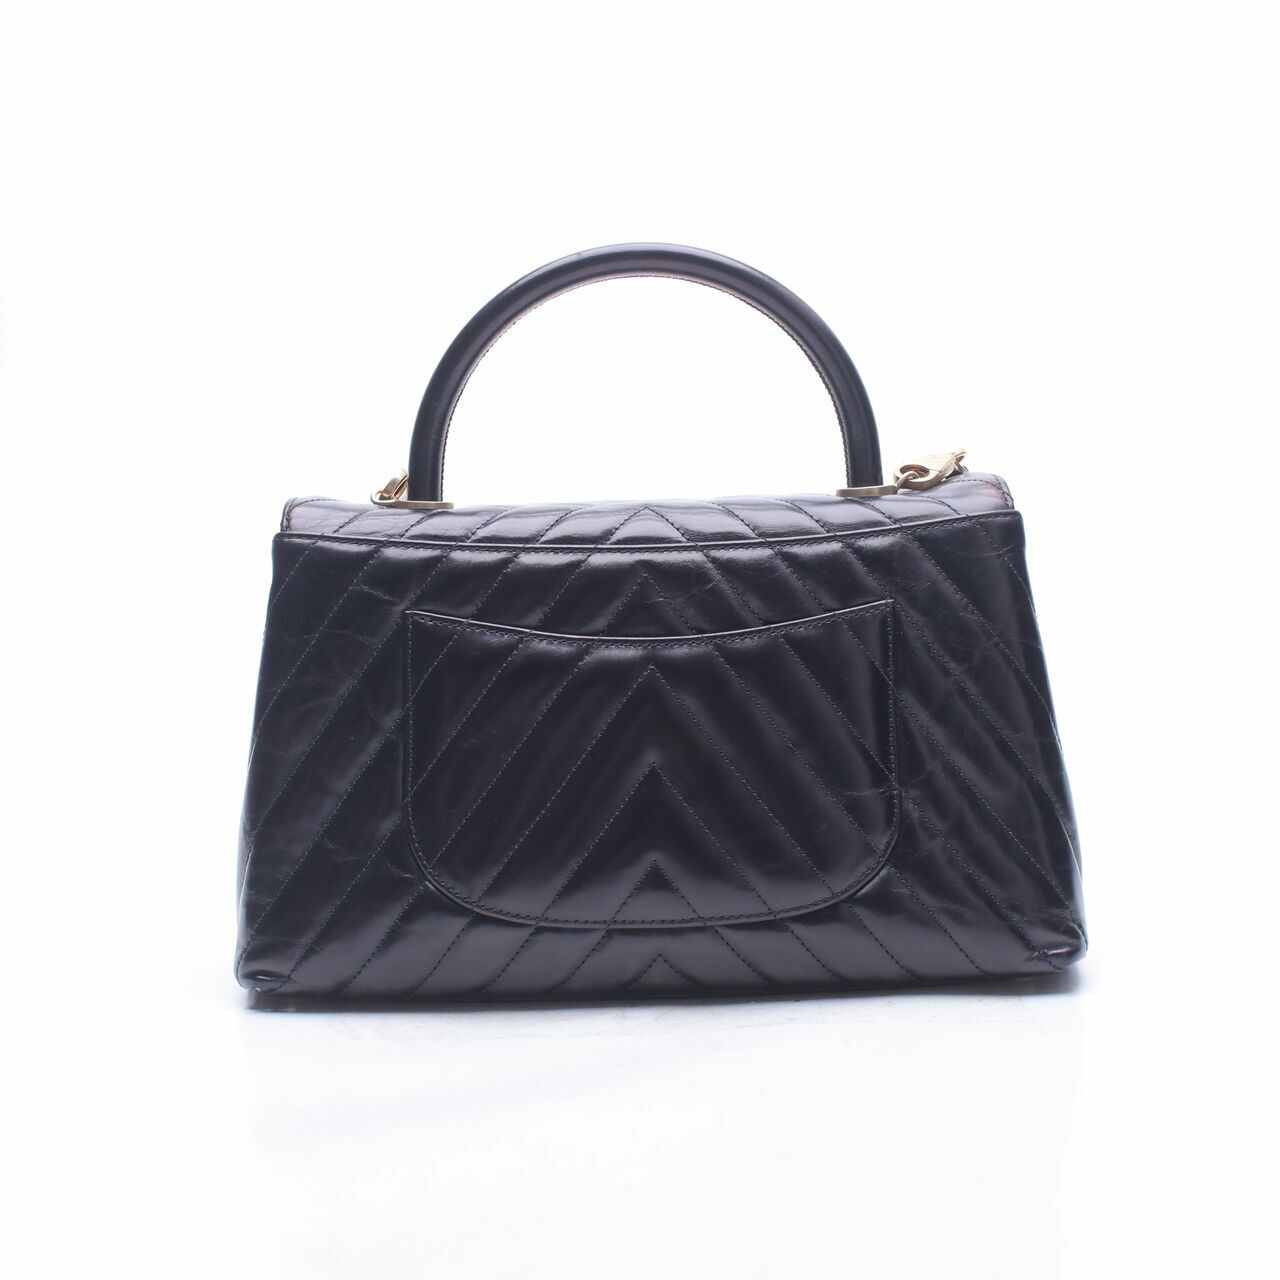  Chanel Black Top Handle Flap Satchel Bag 